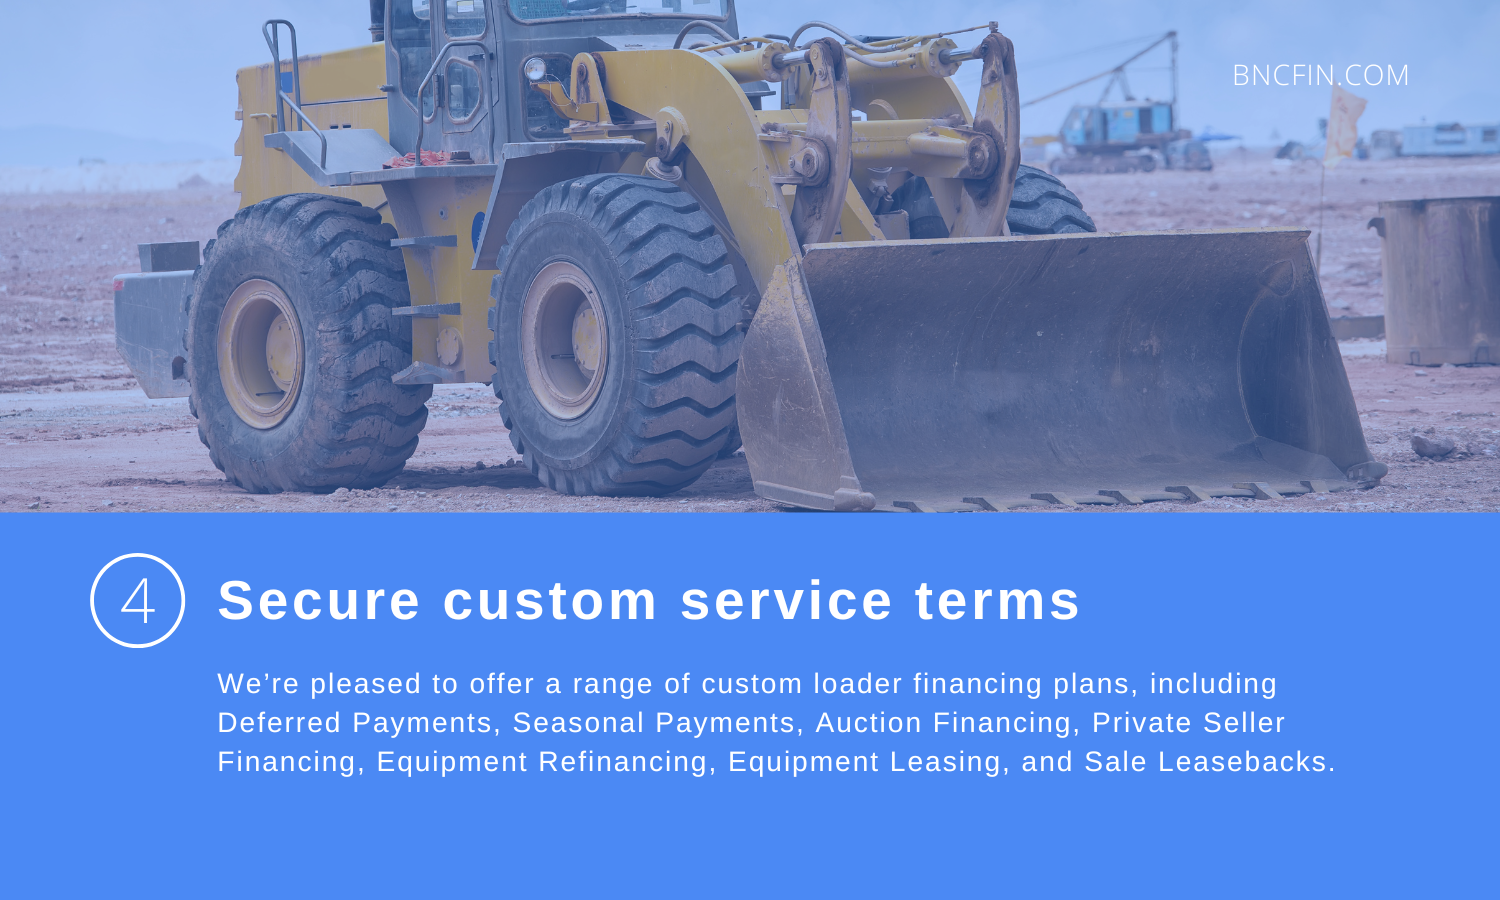 Secure custom service terms.